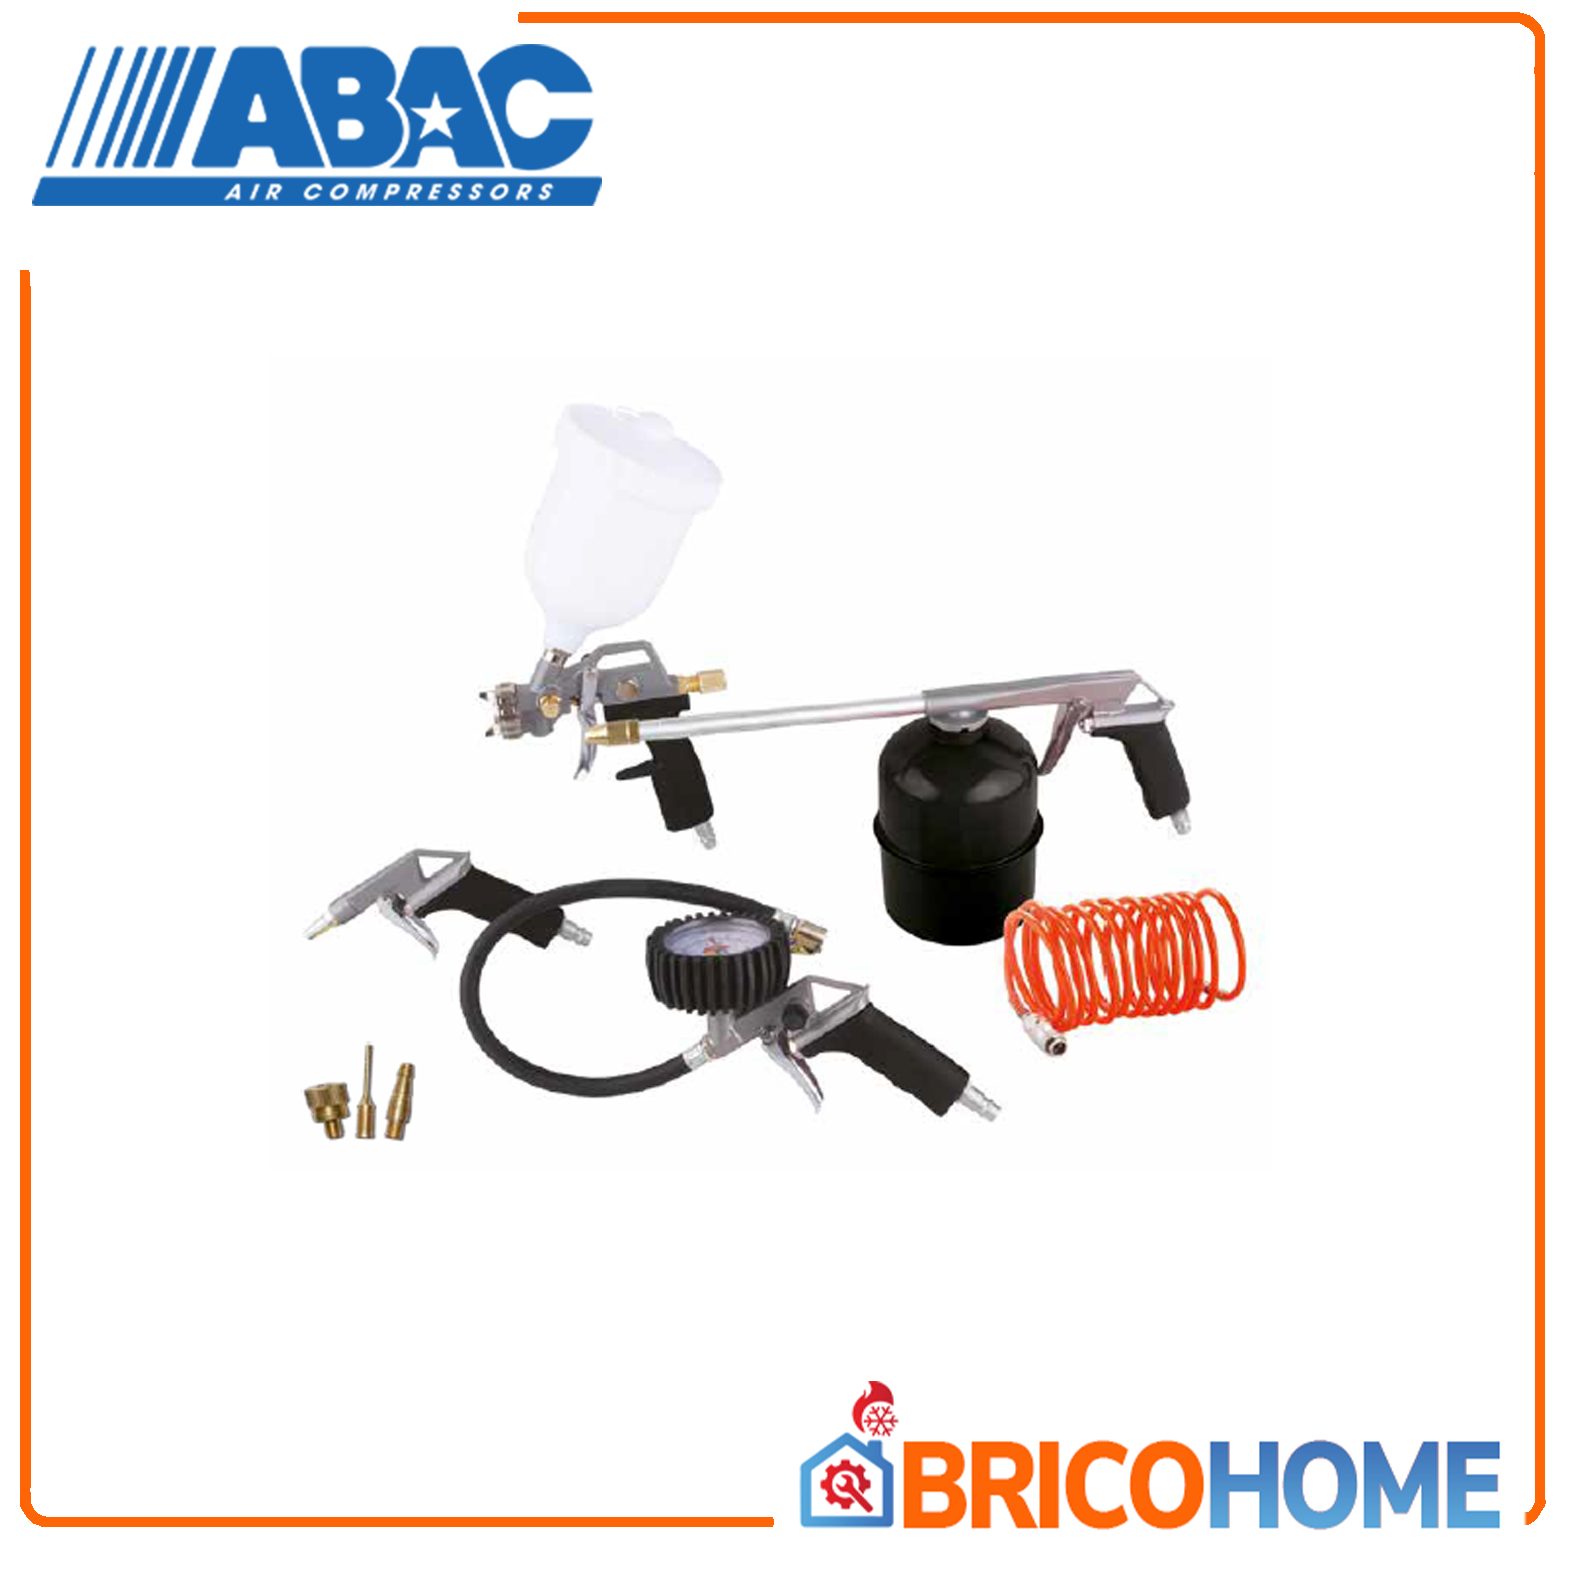 Compressor accessories kit 8 pieces ABAC